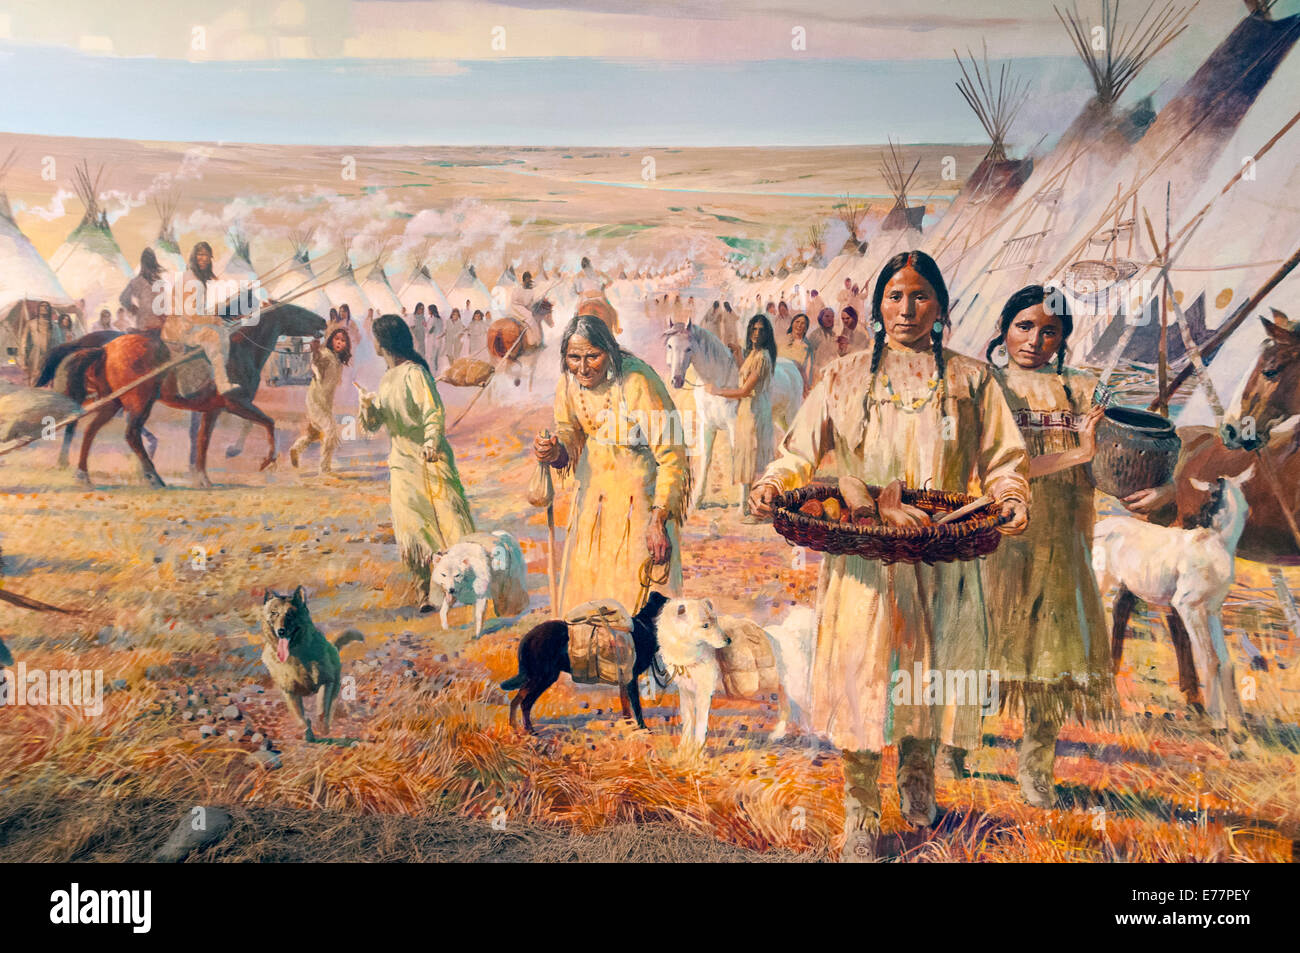 Elk203-5285 Le Canada, l'Alberta, Edmonton, Royal Alberta Museum, camp indien peinture Banque D'Images